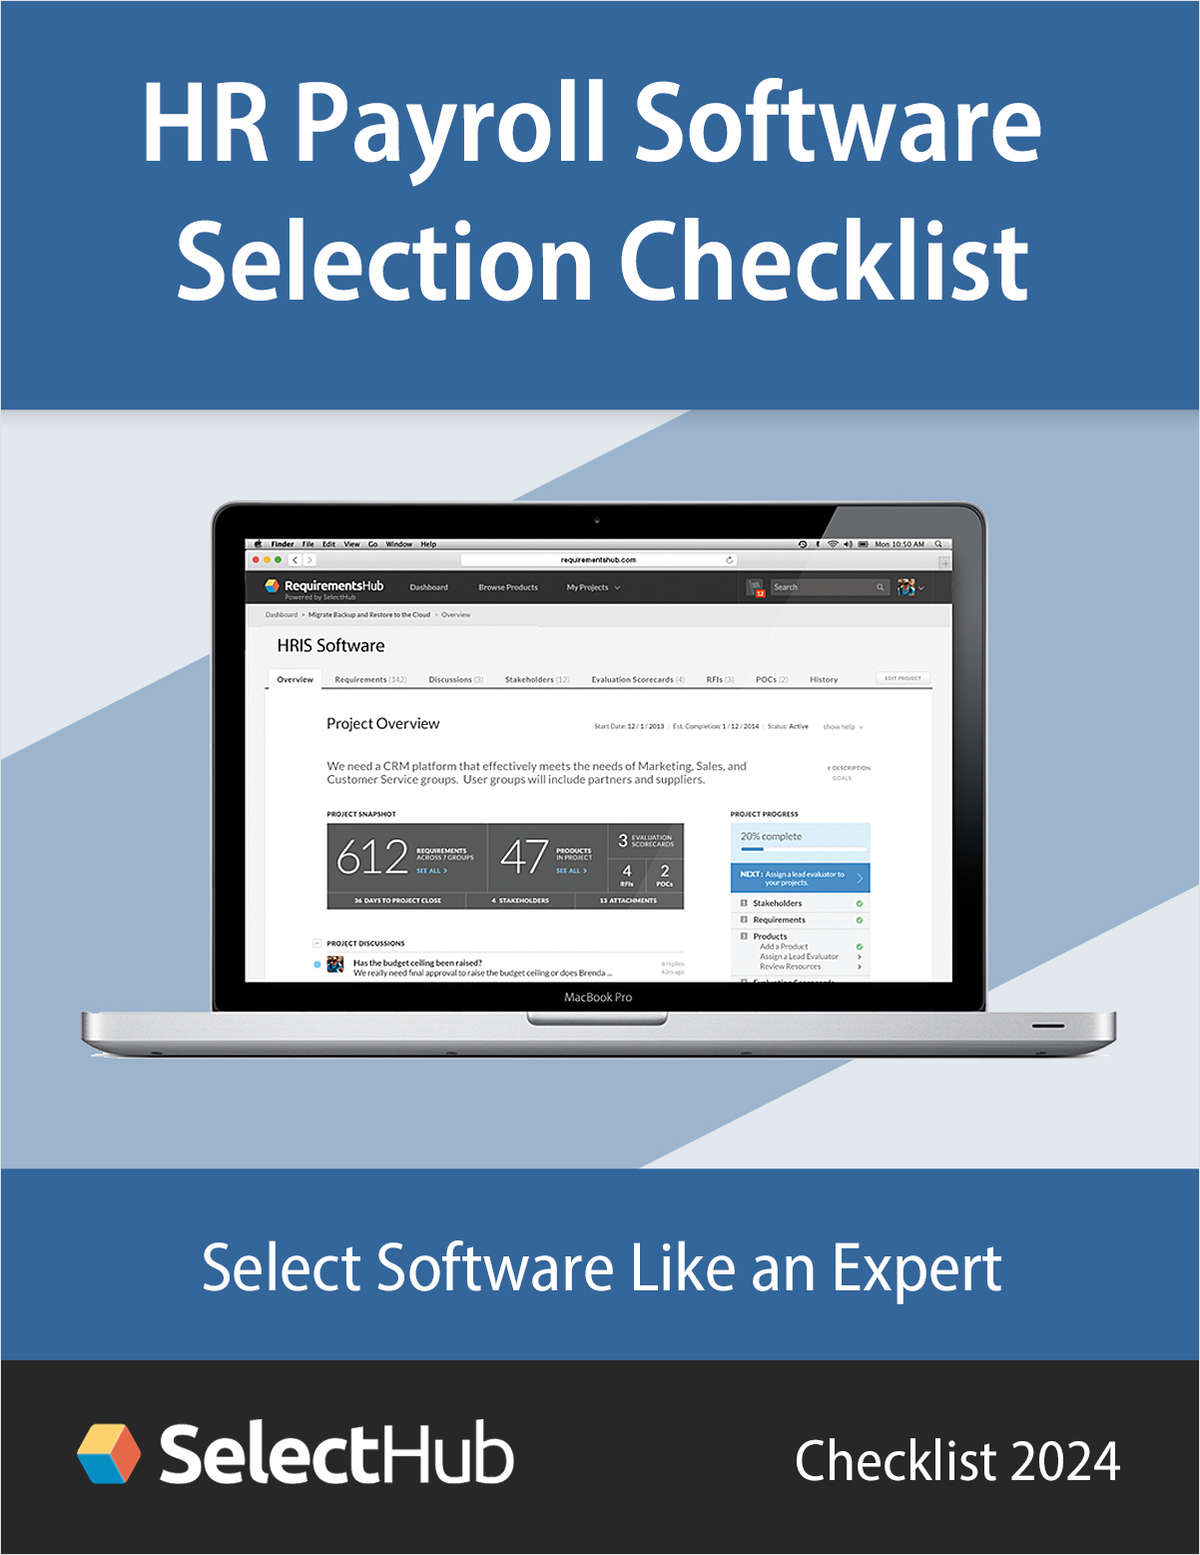 w sele768c8 - HR Payroll Software Selection Checklist 2024